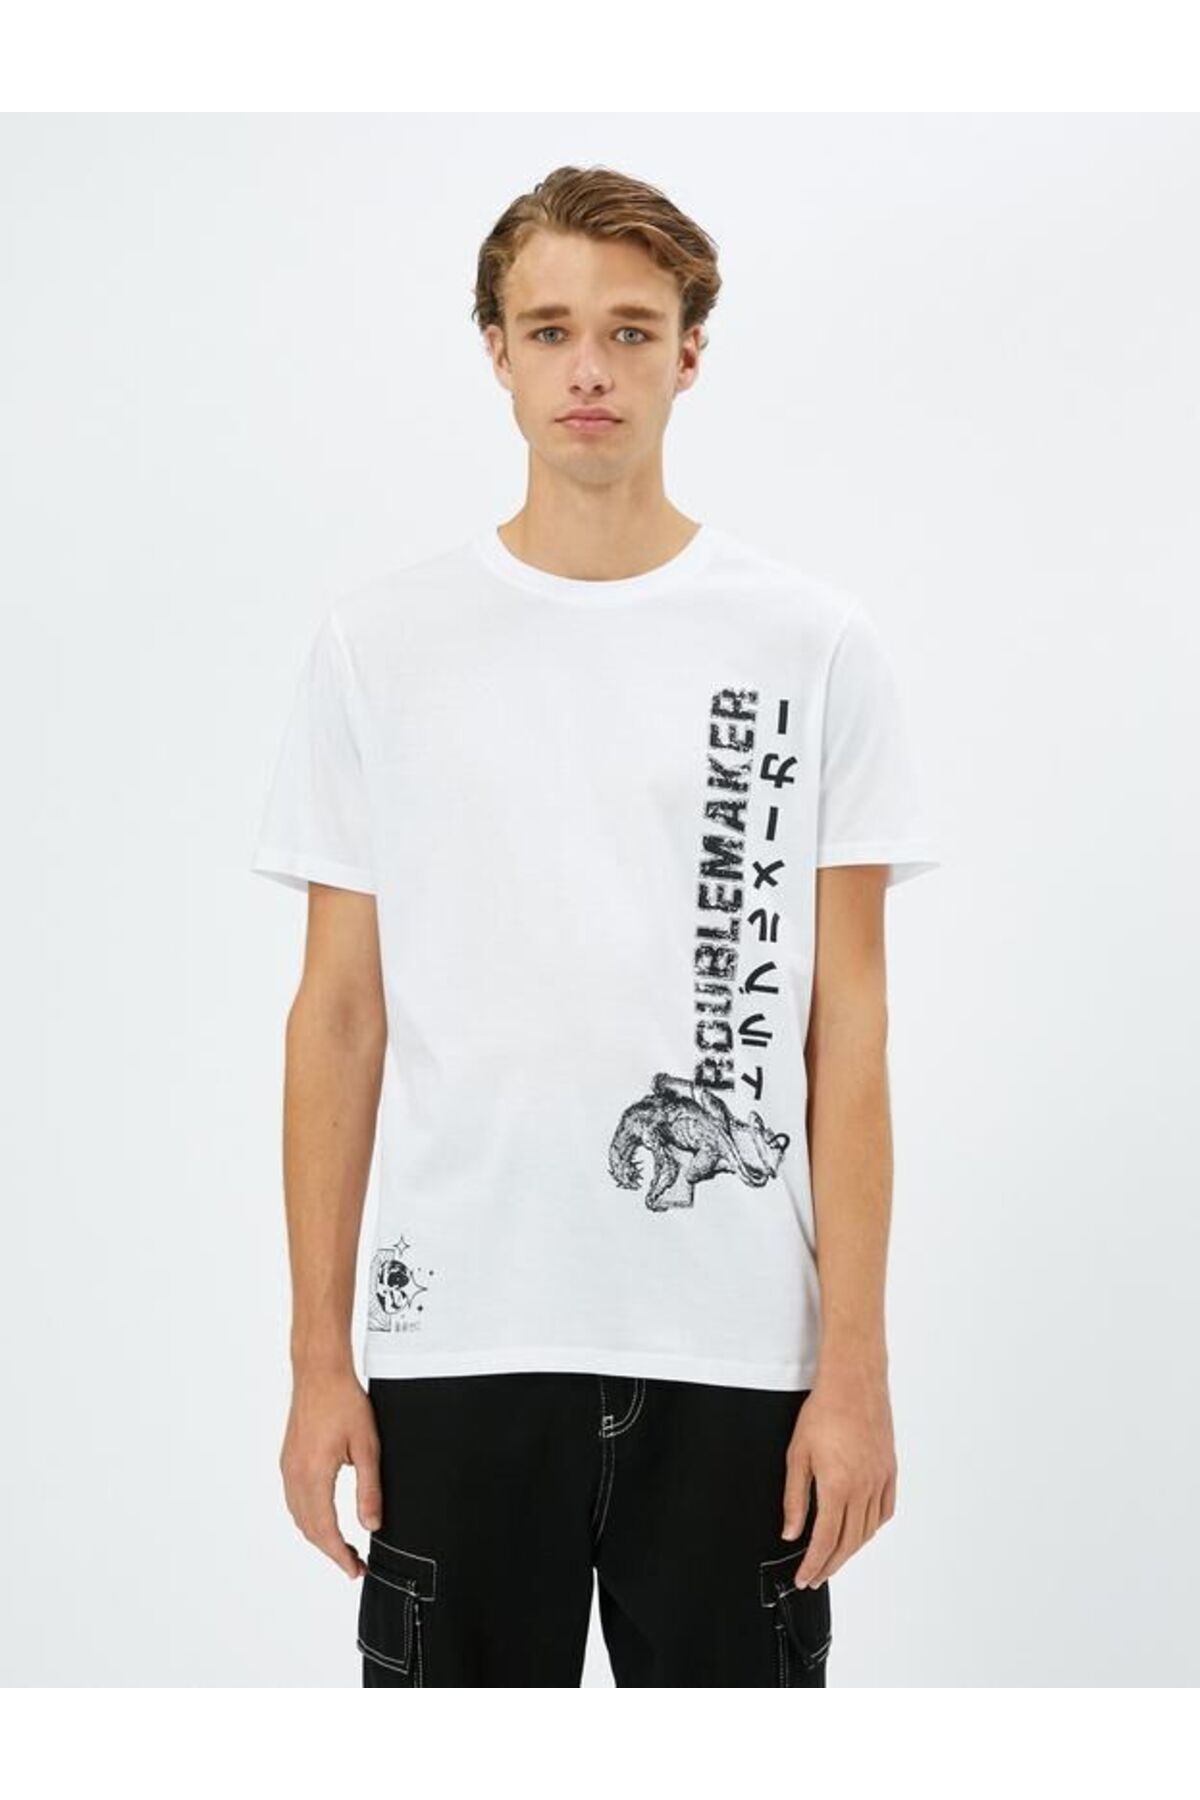 Koton Asian Printed T-Shirt Crew Neck Short Sleeve Cotton